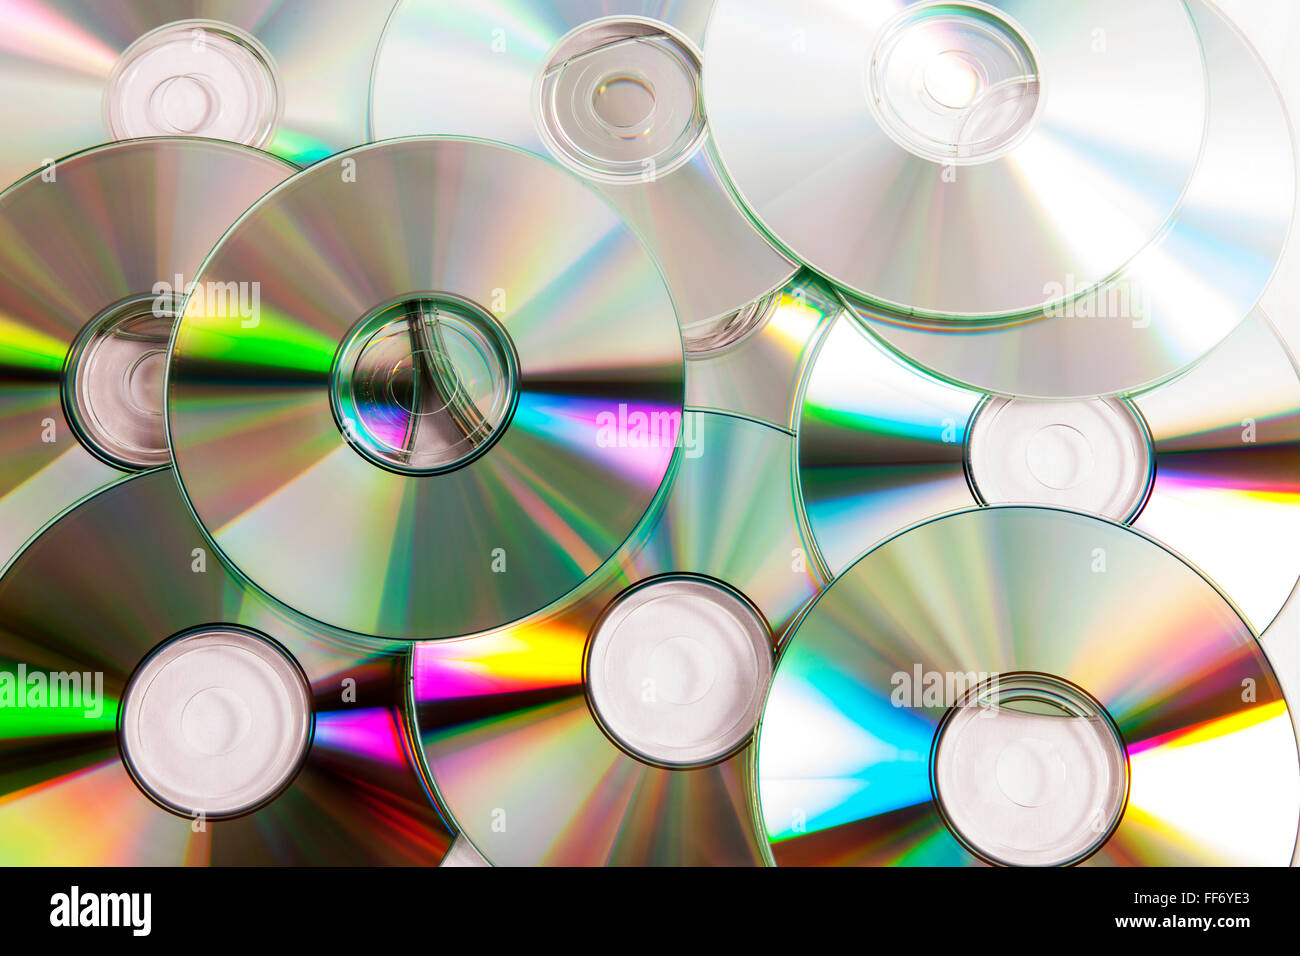 Cds cd dvd dvds discs digital data storage piracy disc full frame music pile stack studio burn information movie optical Stock Photo